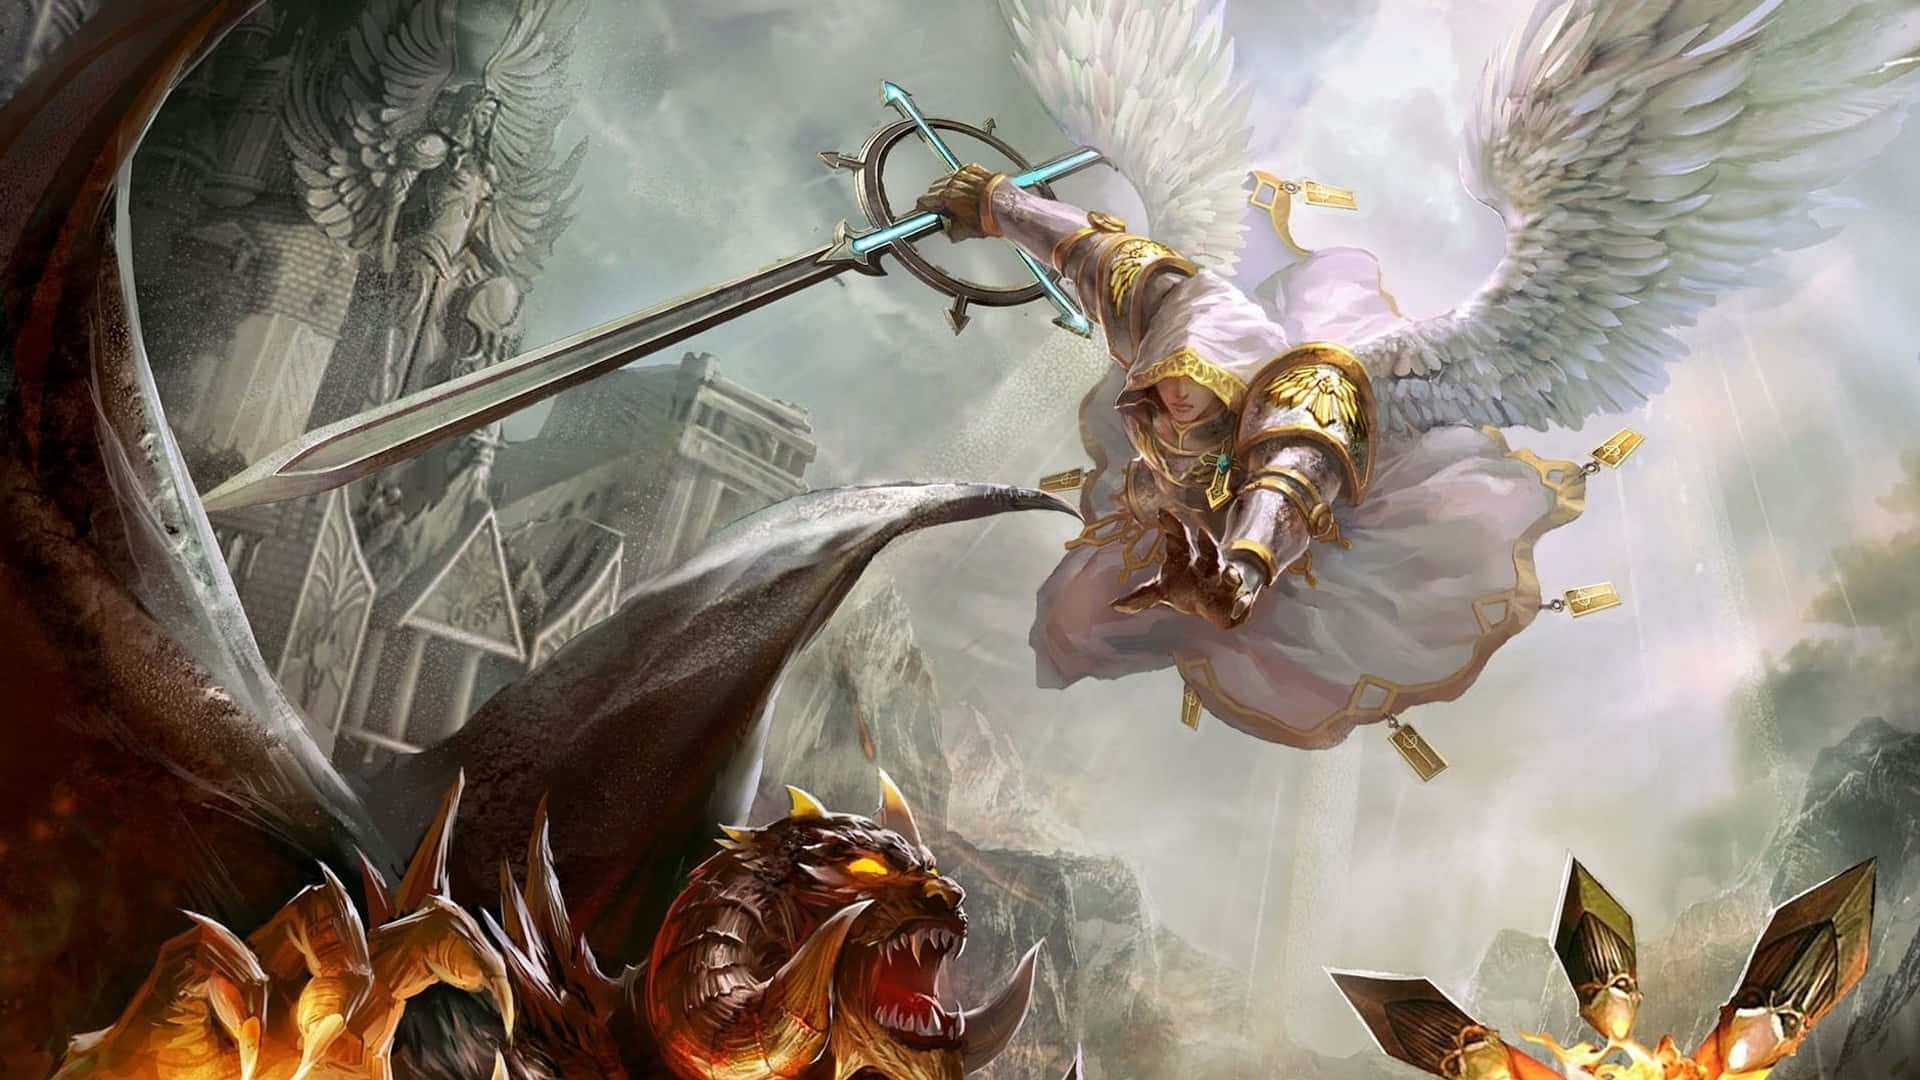 Warriors bravely face off against Demons in epic battle Wallpaper